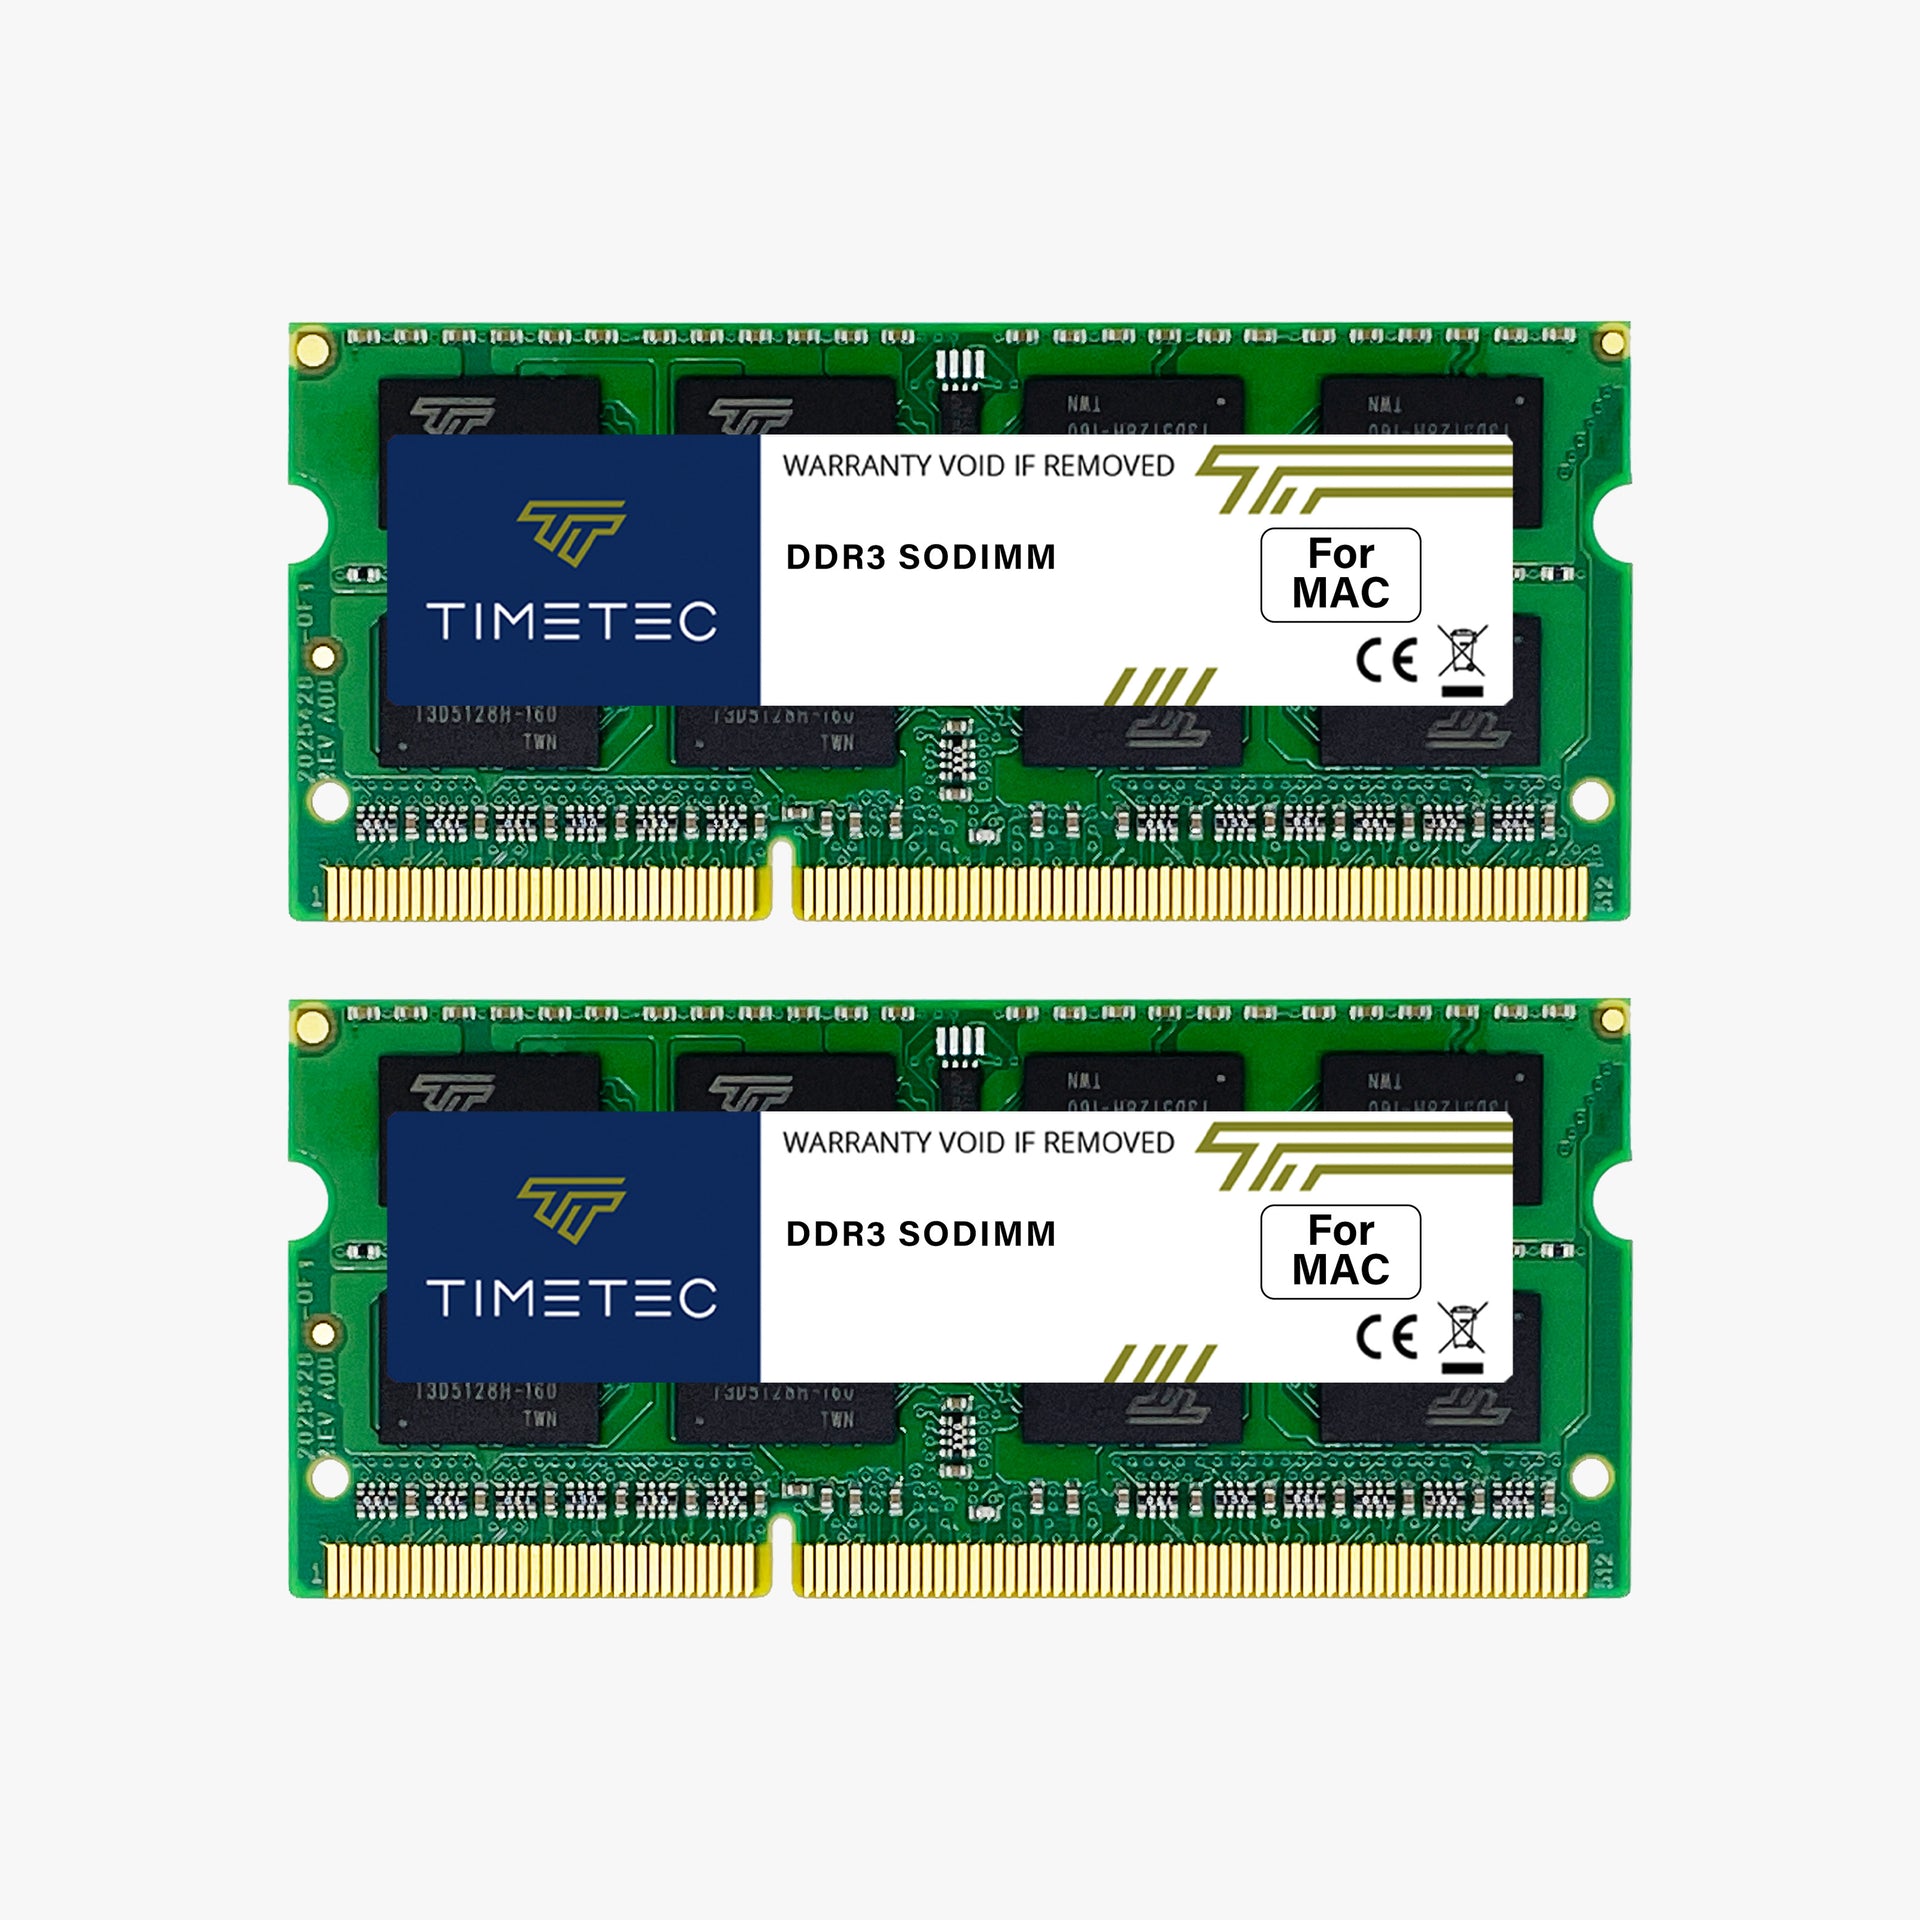 TIMETEC DDR3 SODIMM Memory FOR MAC